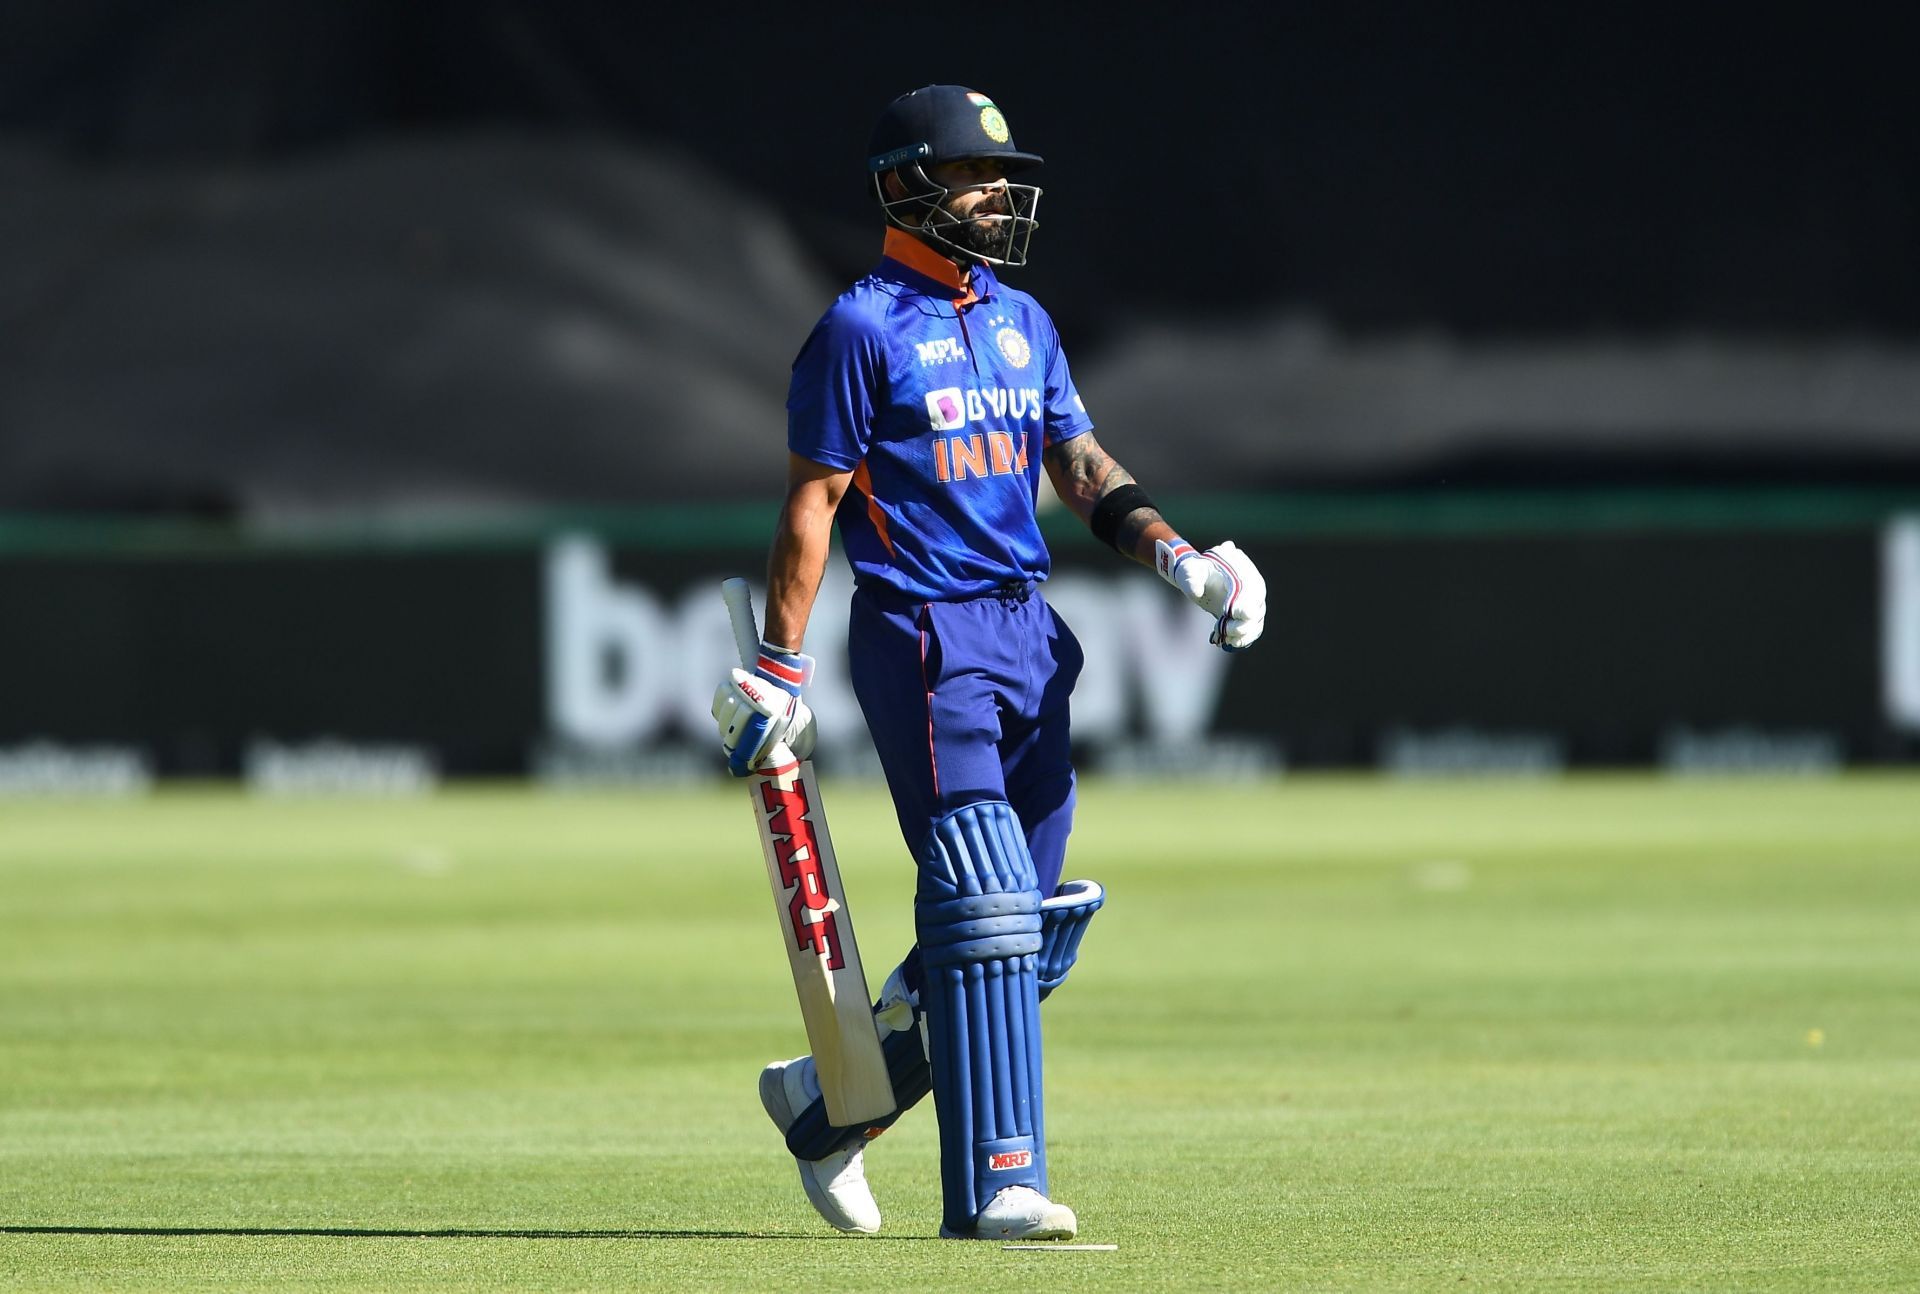 Former India captain Virat Kohli has hit five fifties in his last six ODI innings